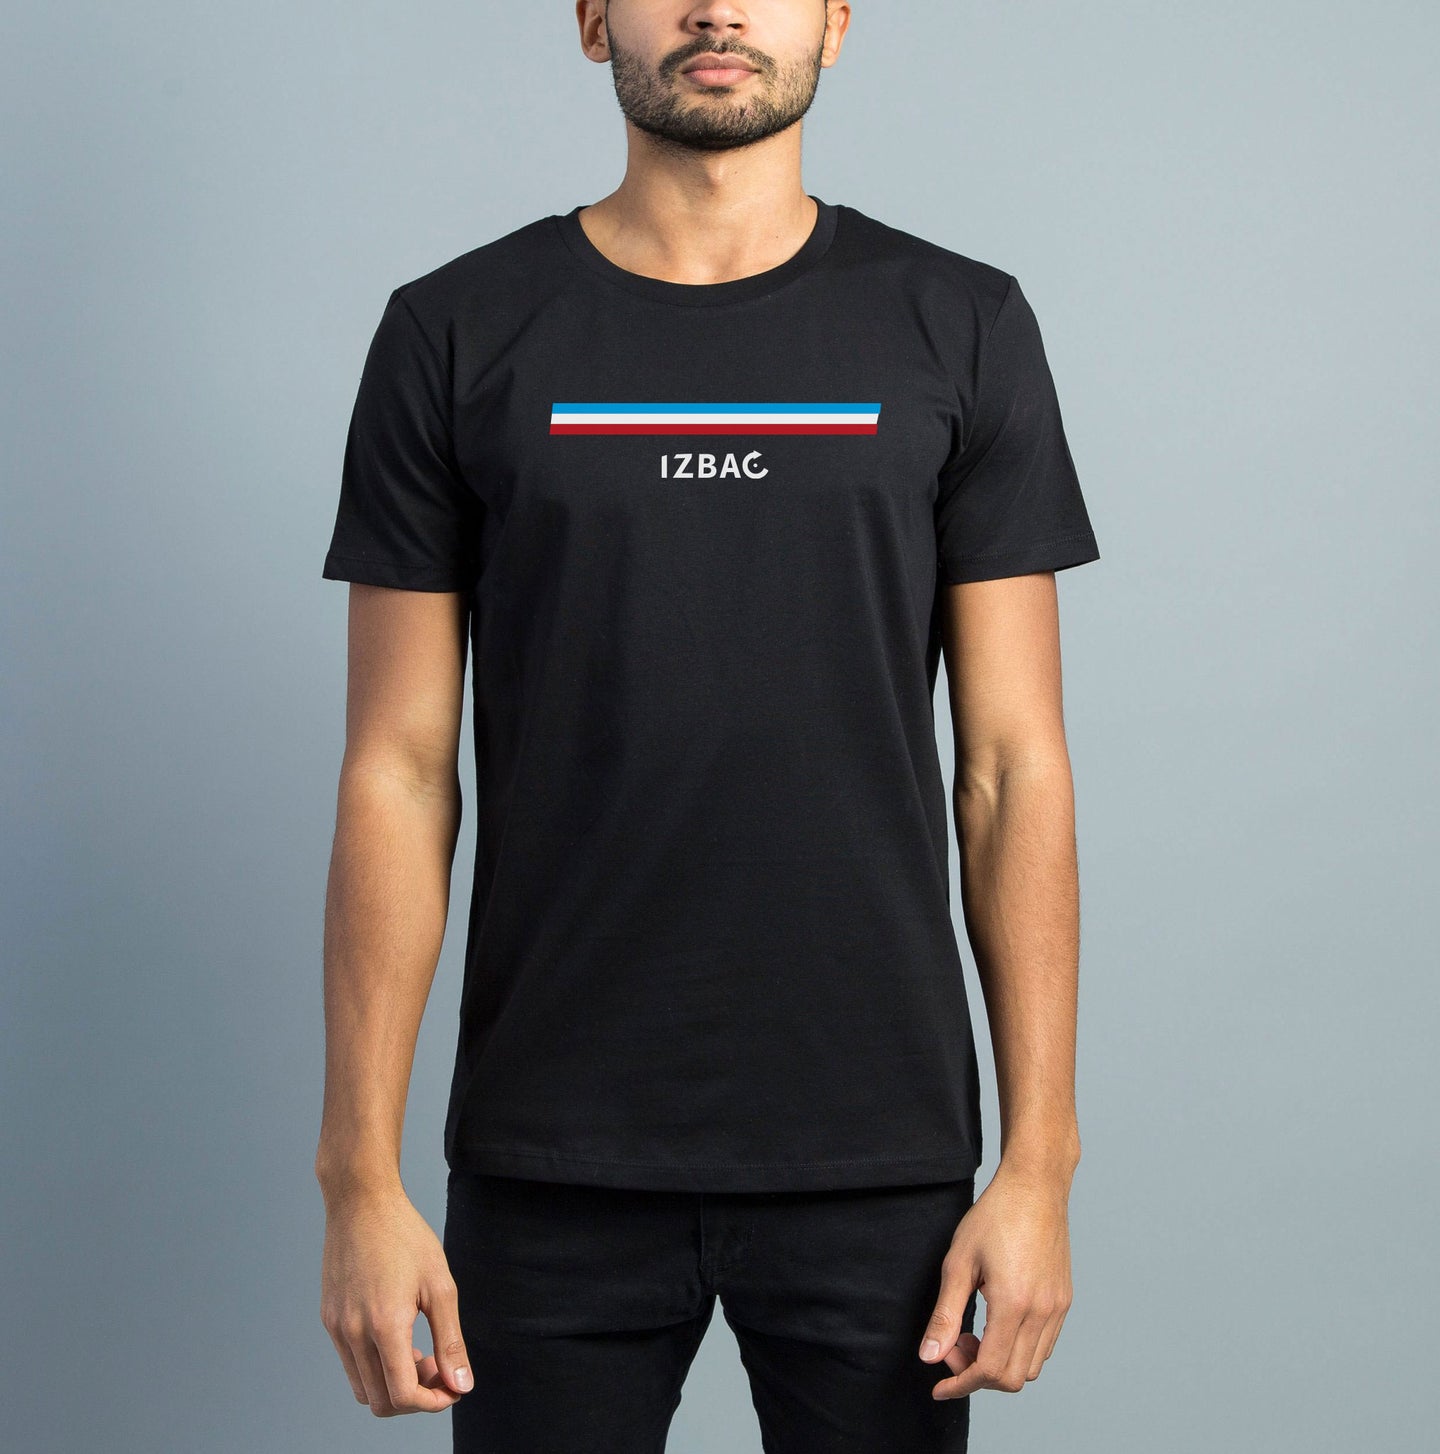 IZBAC Black 1 Tee-shirt manches courtes